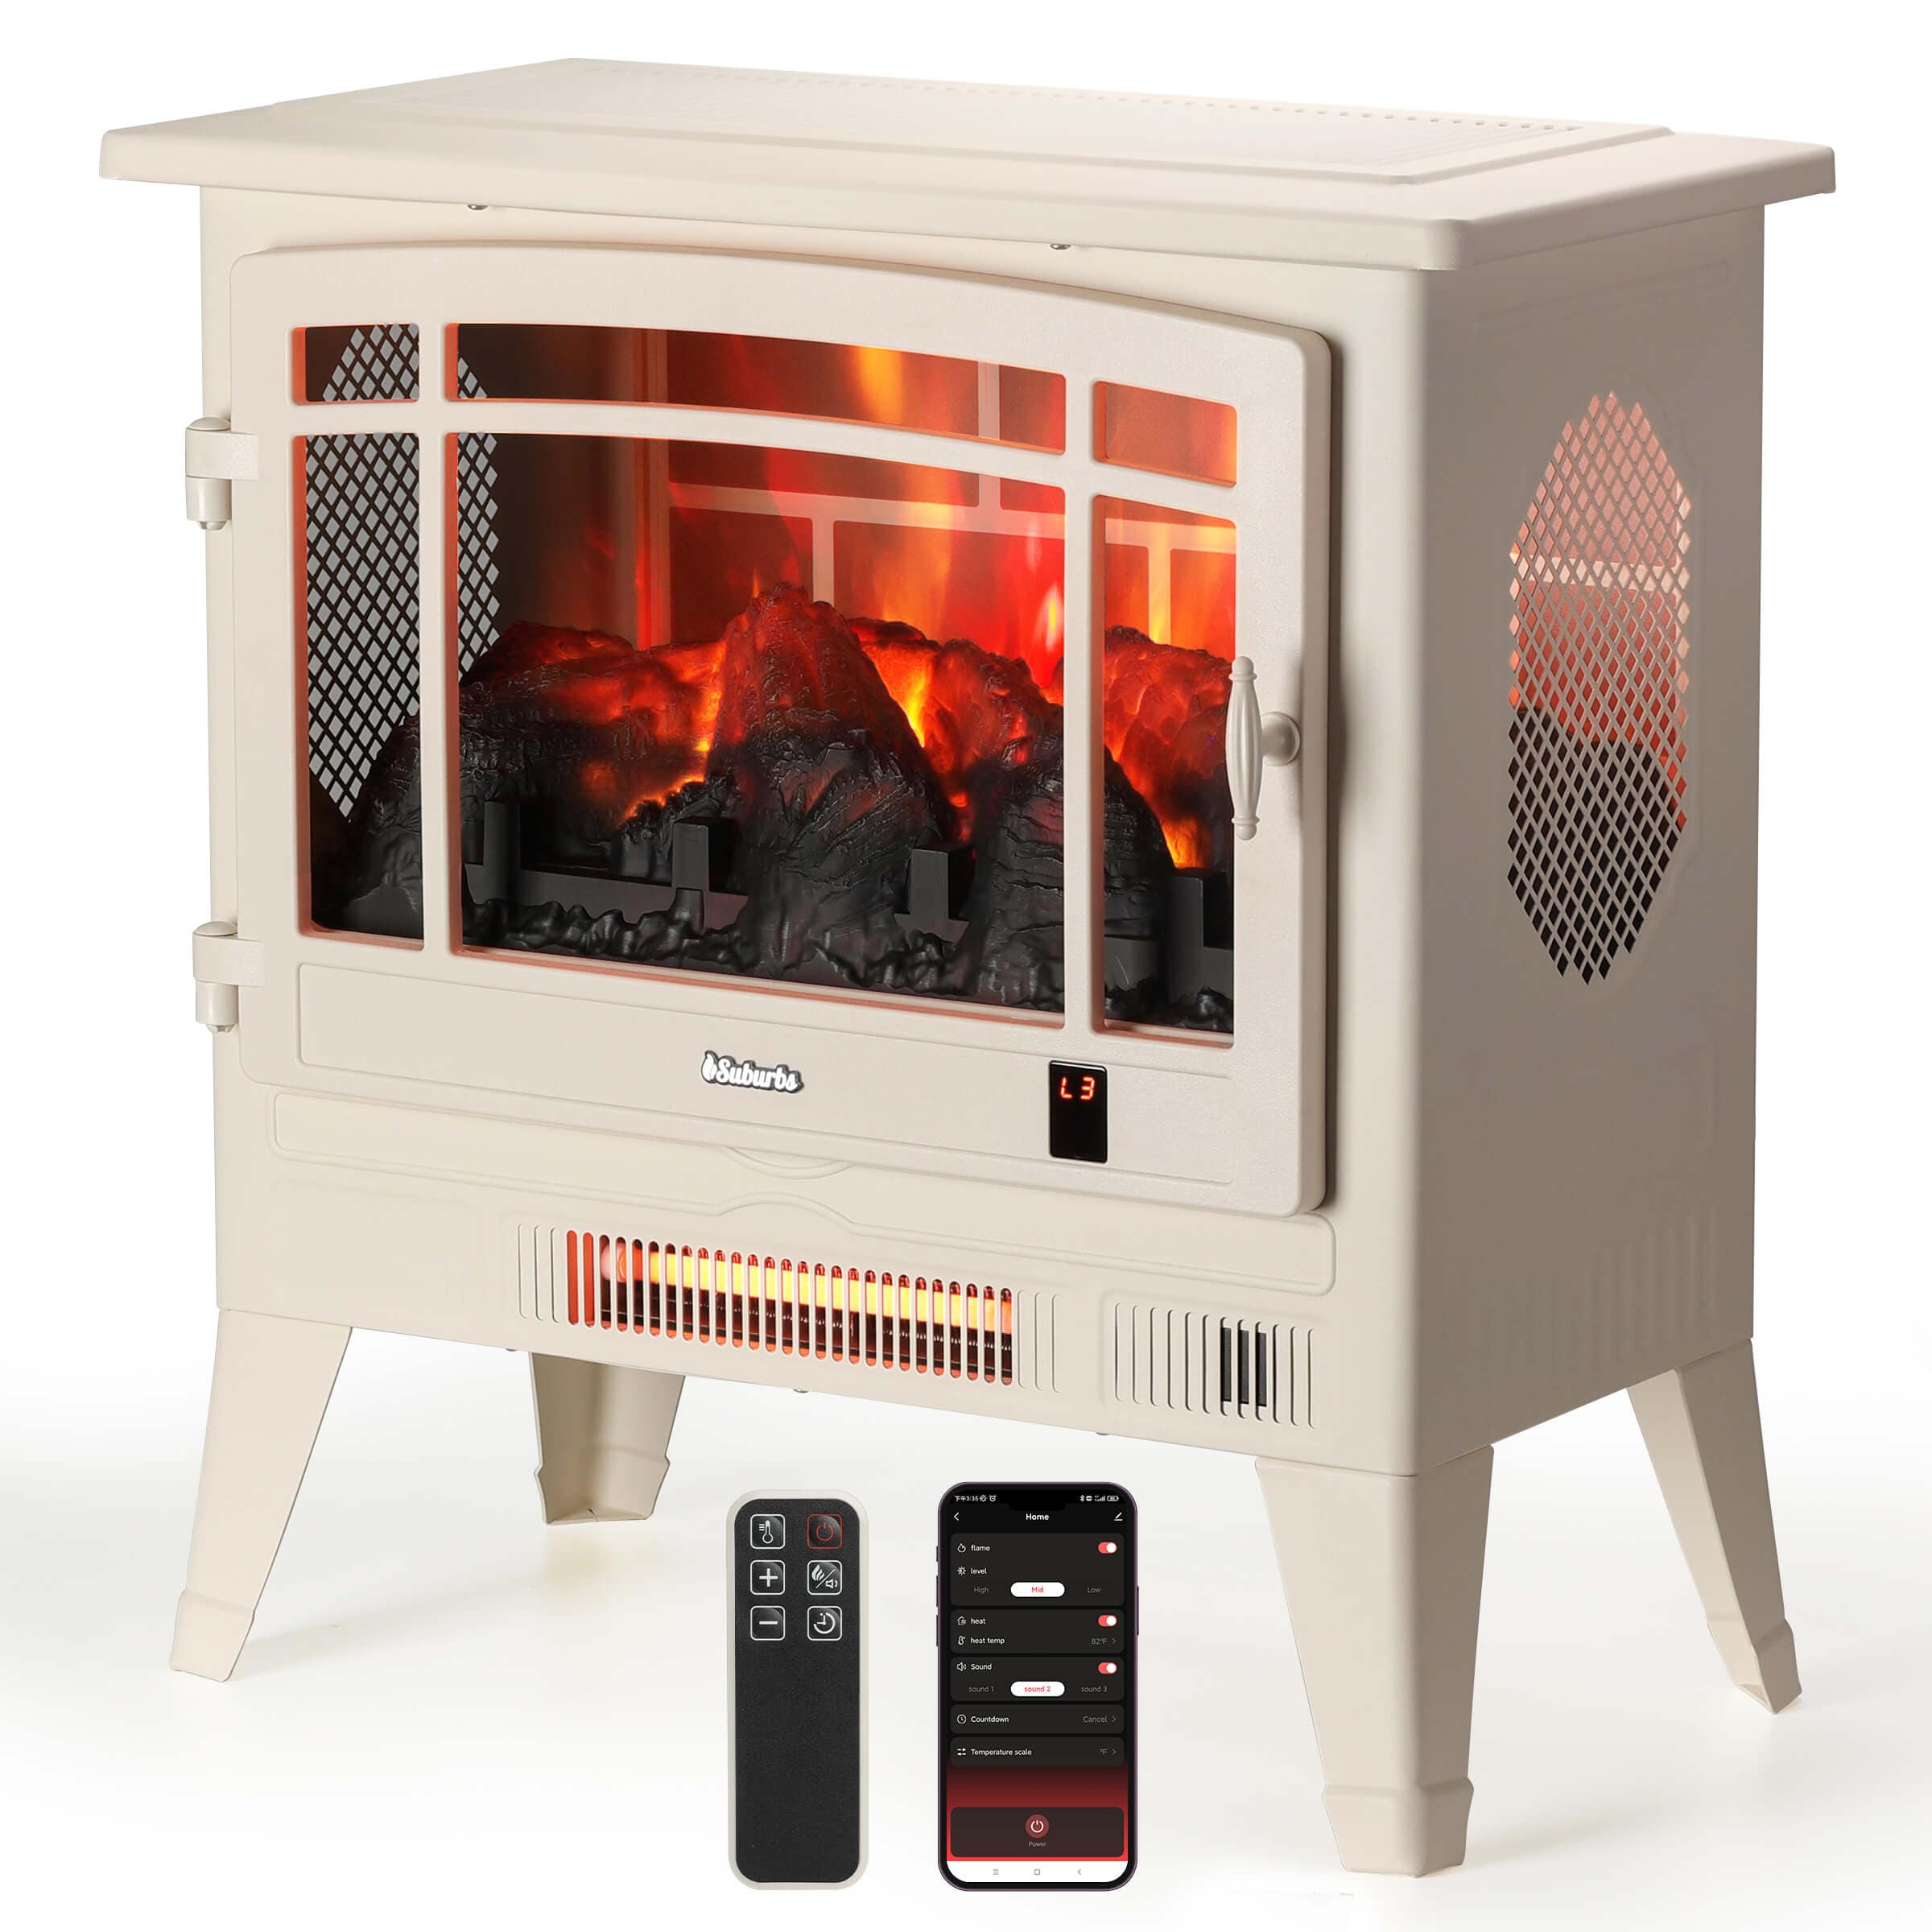 TURBRO Suburbs TS25 Smart Electric Fireplace Stove Heater, WiFi Enabled Electric Fireplace Stove Ivory